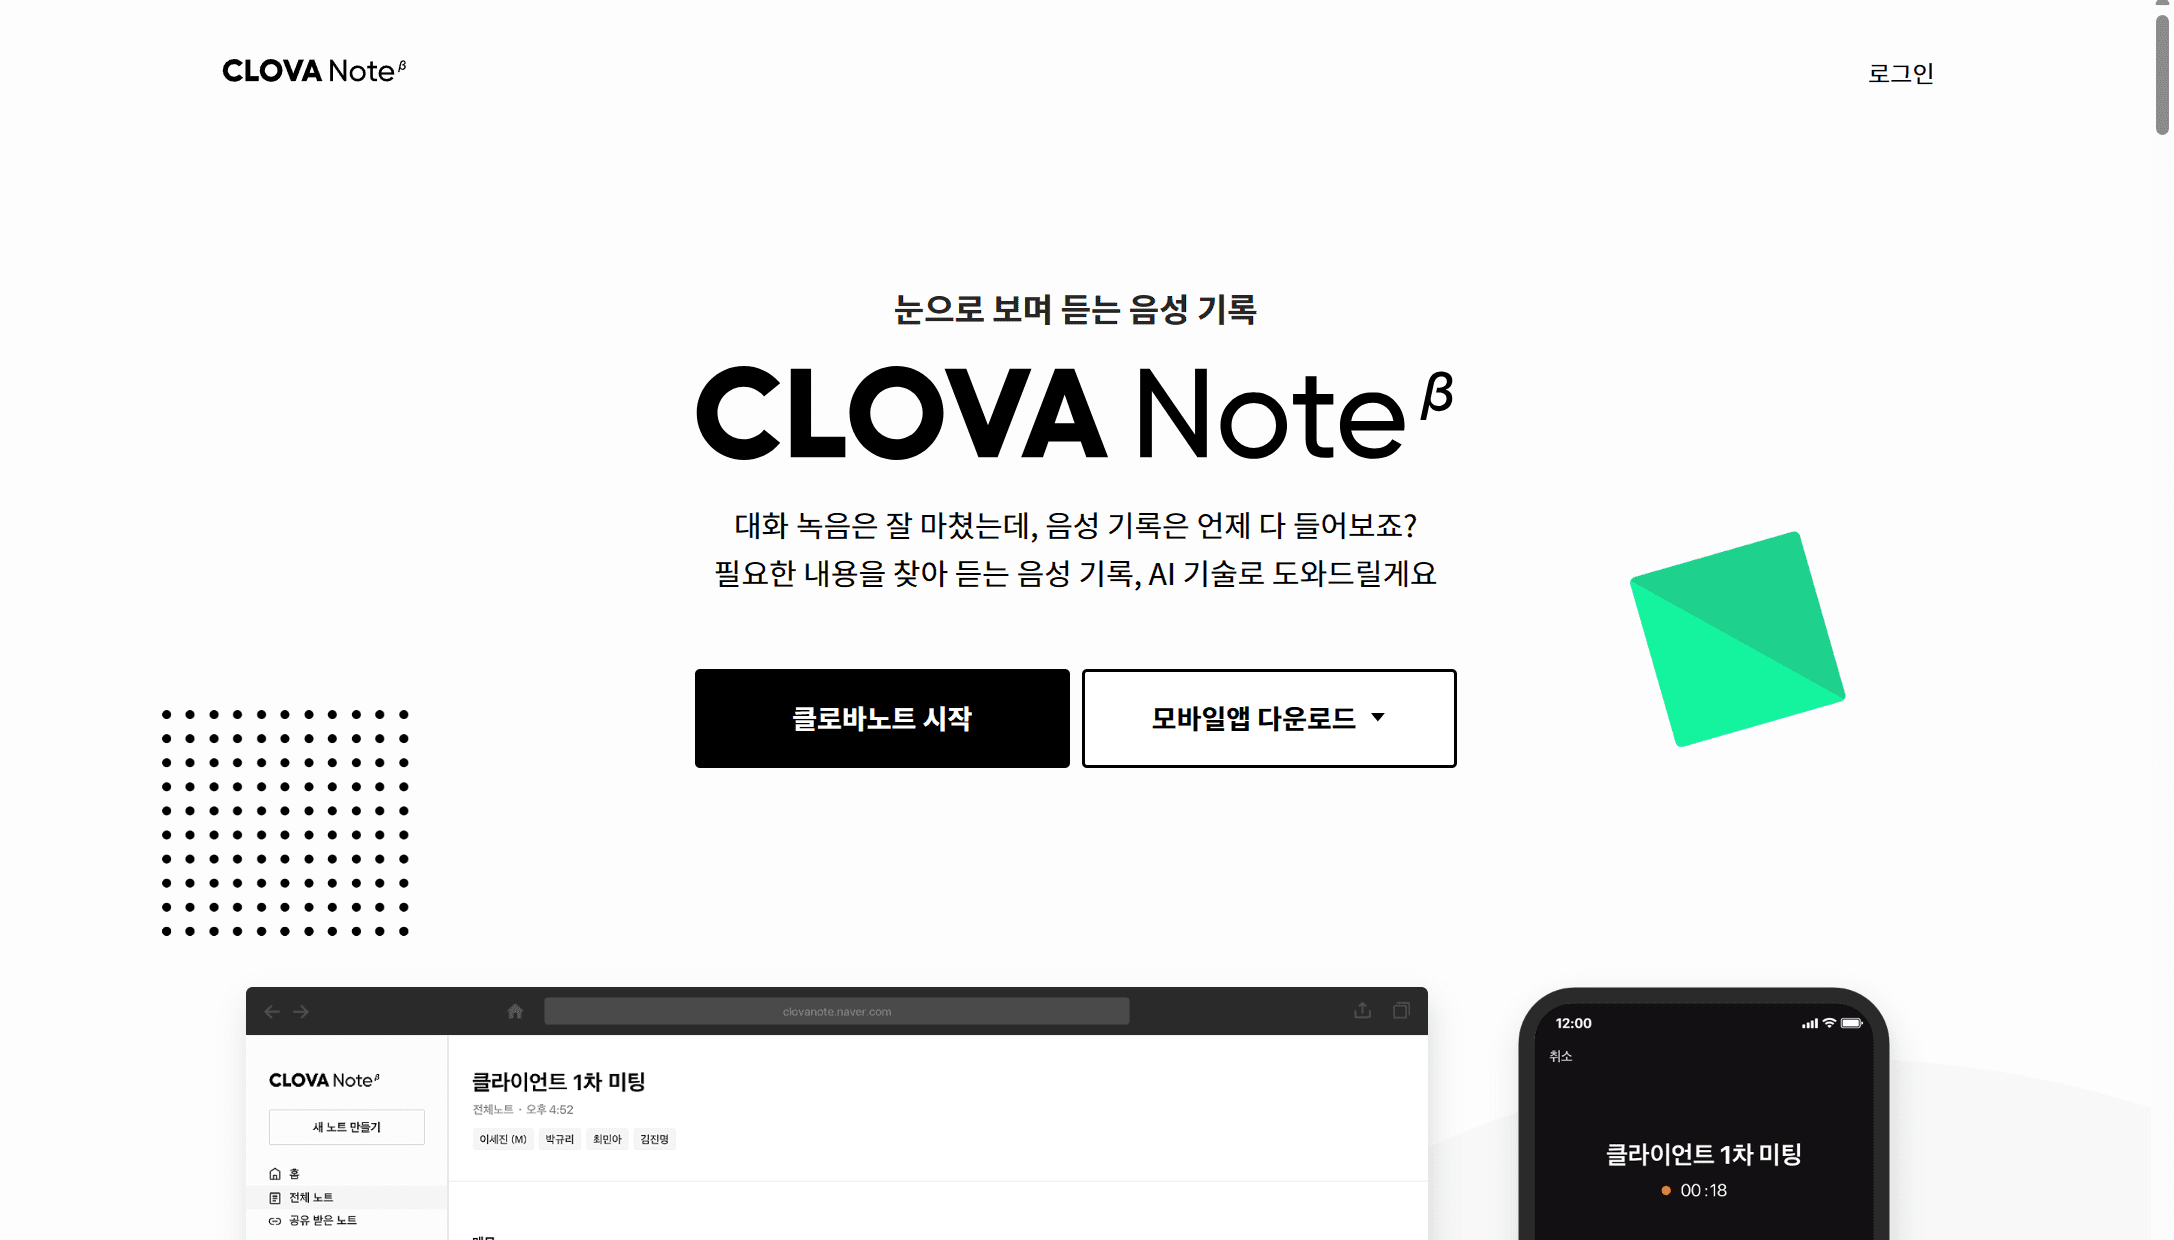 Clova Noteは、強力な韓国語会議書き起こしツールです。